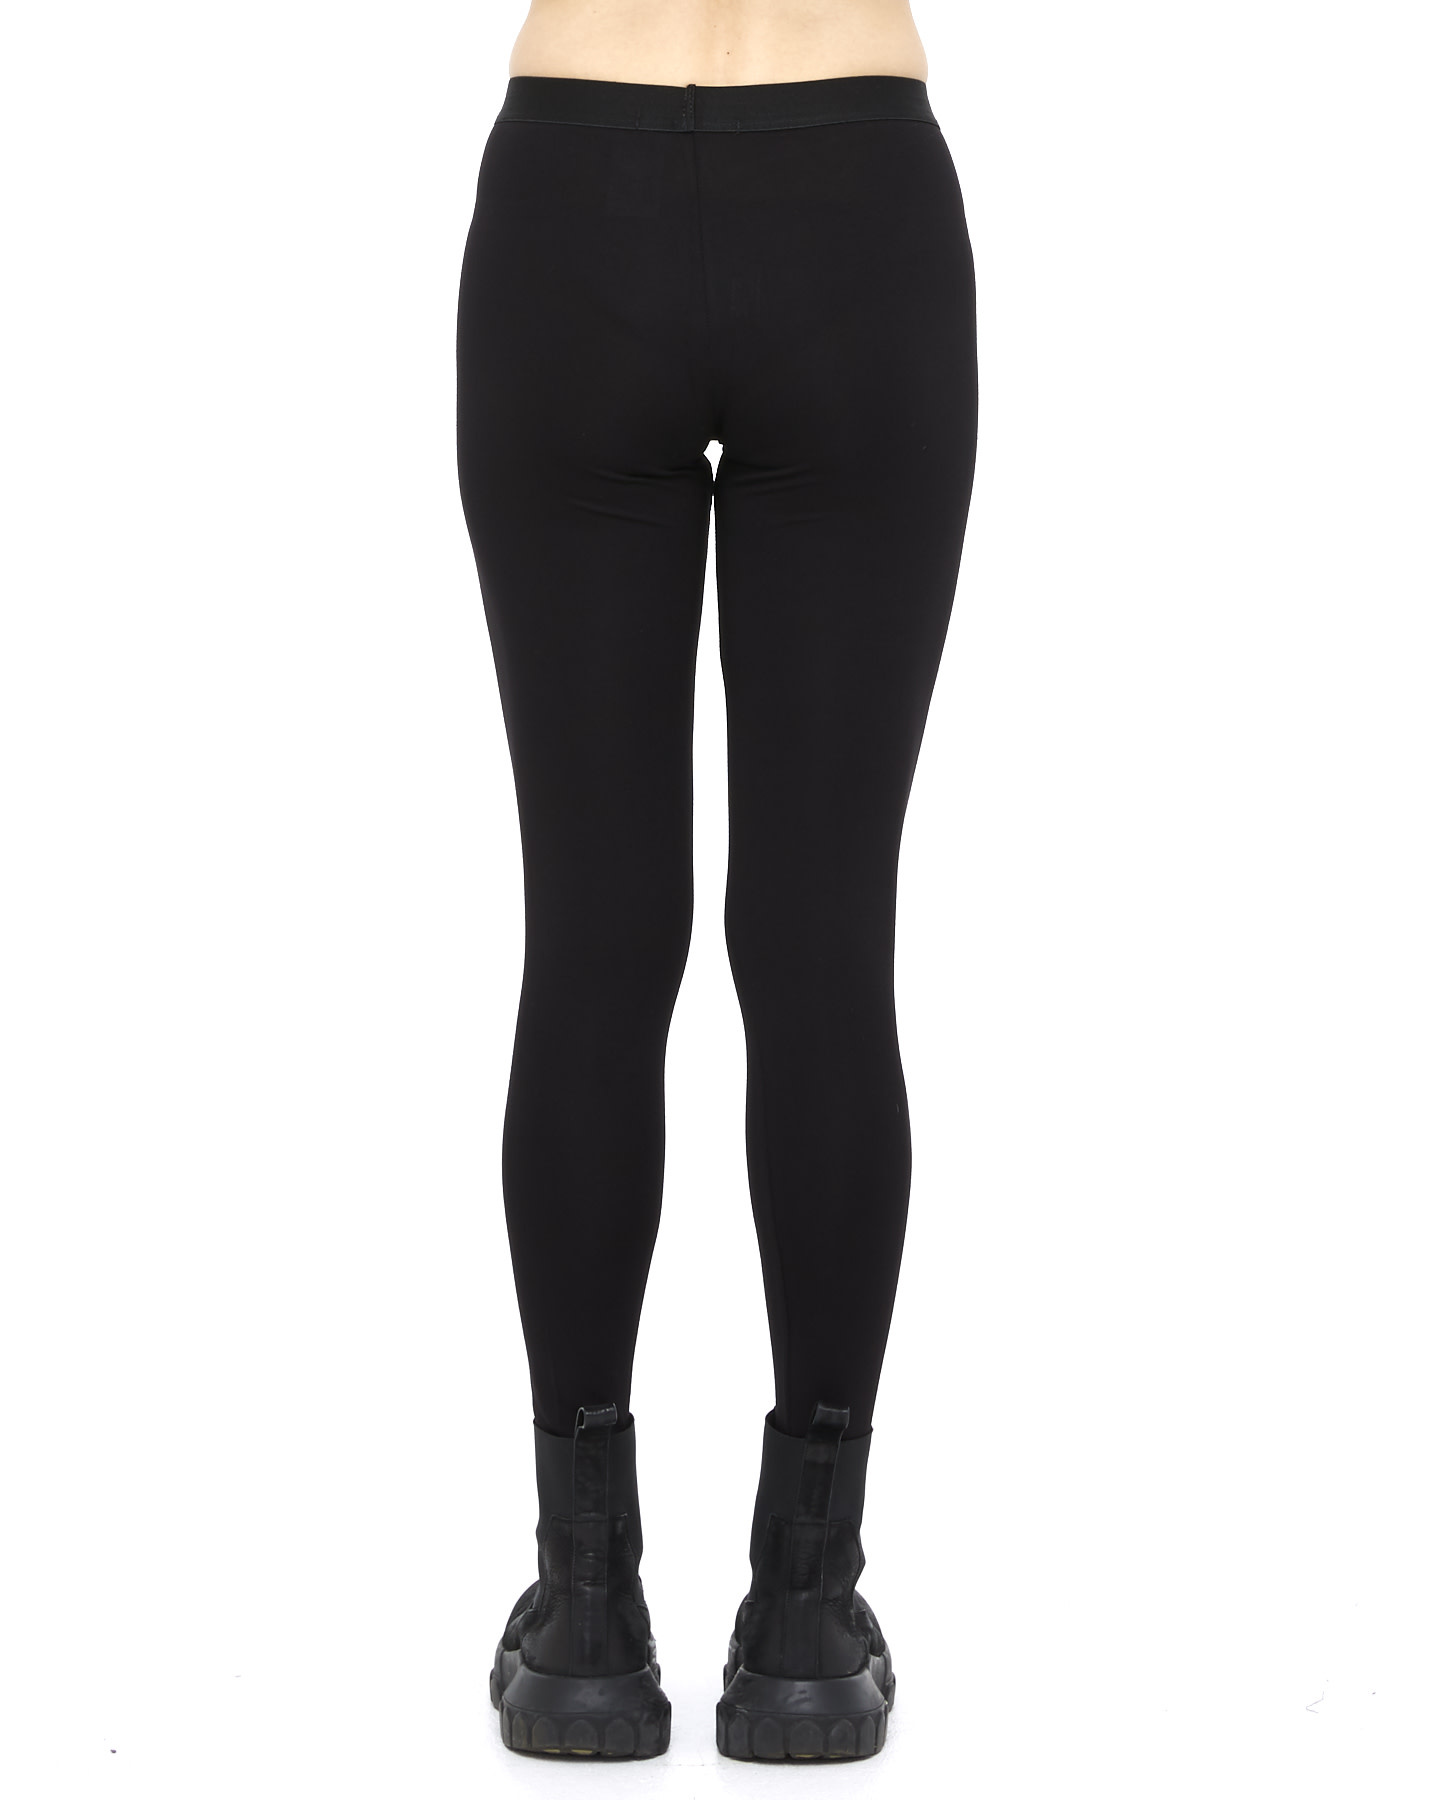 Buy Girls' Leggings Cross Flare Pants Black High Waist Soft Stretchy Full  Length Yoga Bootcut Pants for Kids Teens Dance, Black, 8-9 Years at  Amazon.in